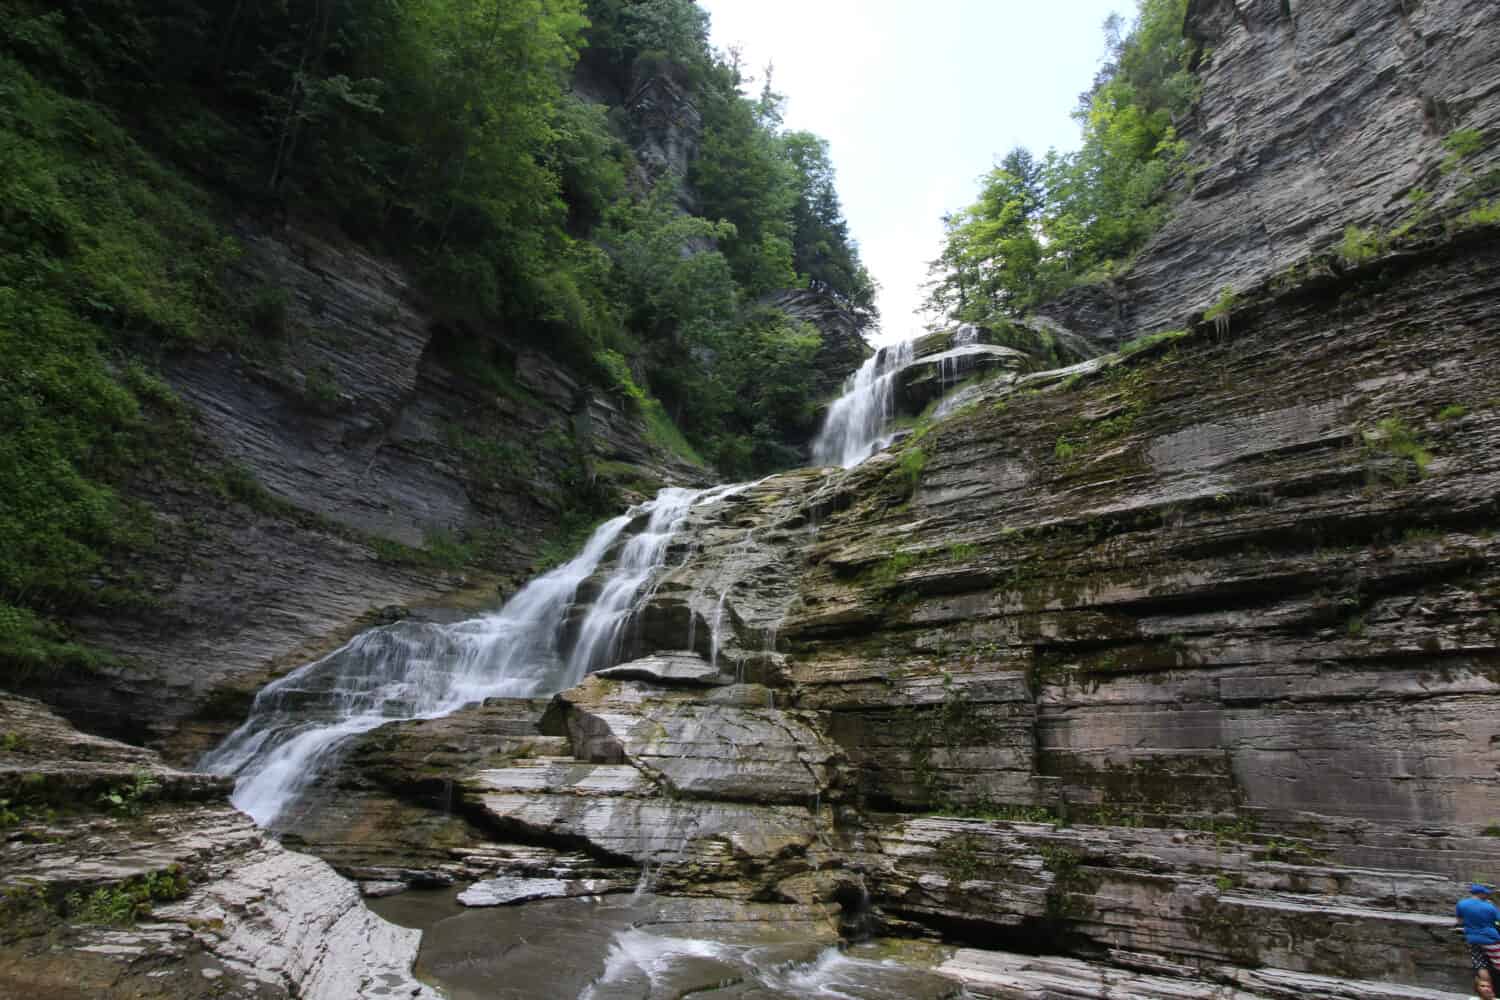 Lucifer Falls at Robert H Treman State Park close to Ithaca NY